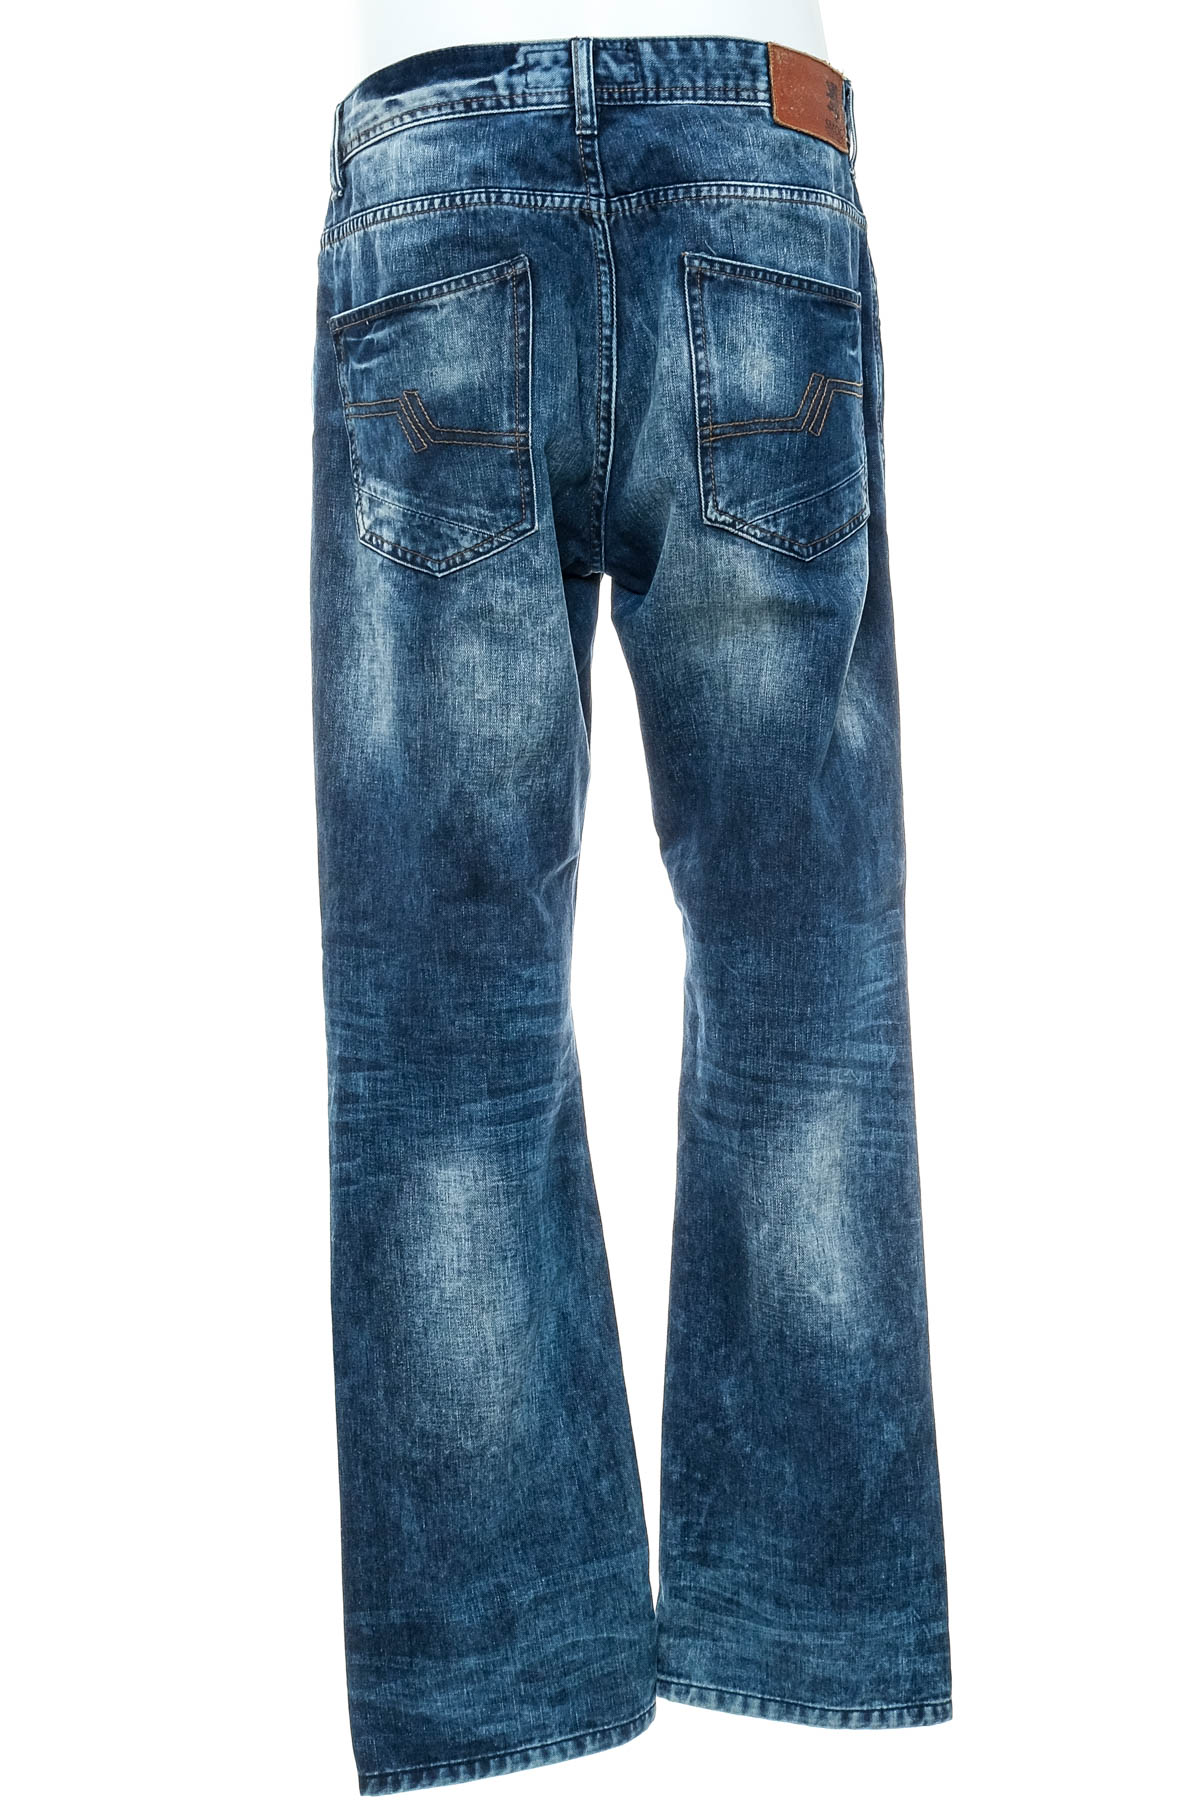 Men's jeans - SMOG - 1